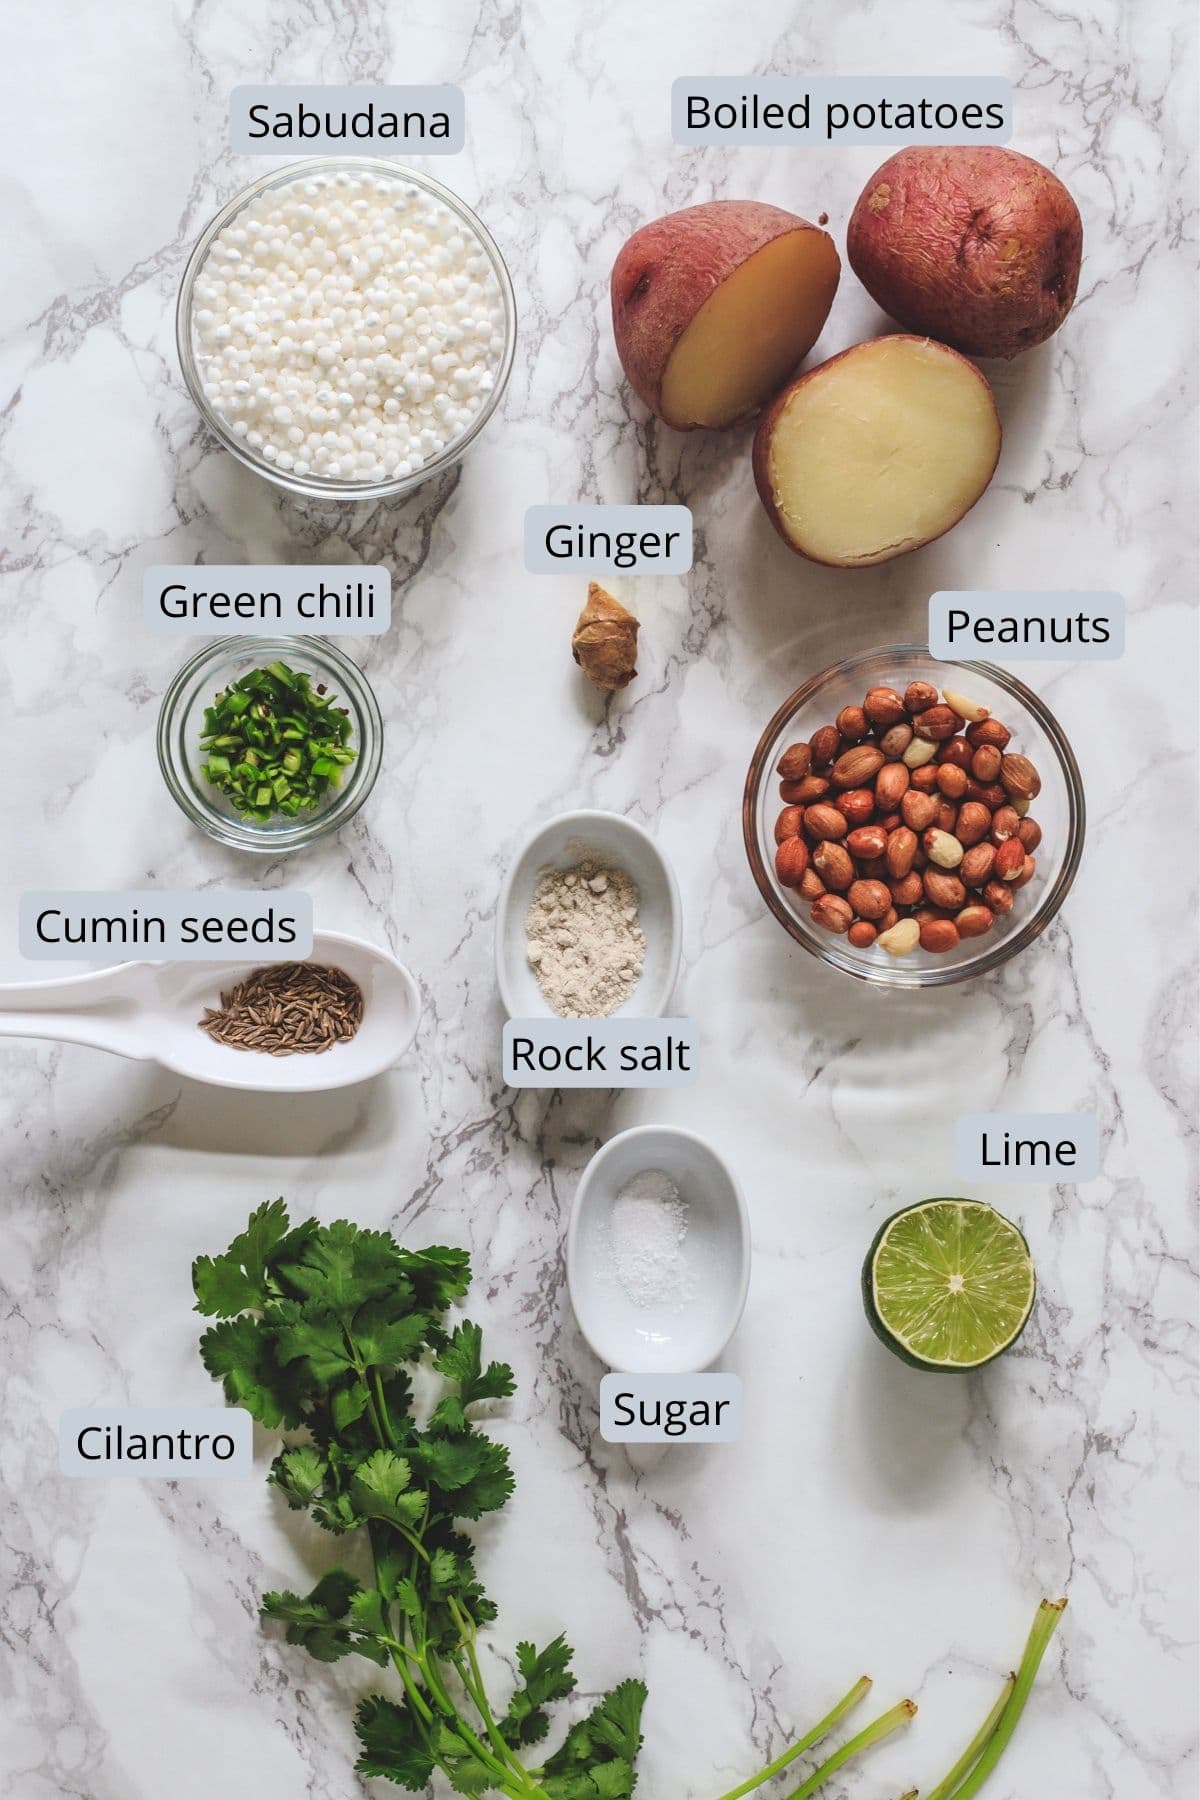 ingredients used in sabudana vada includes tapioca, potatoes, peanuts, ginger, green chili, cumin seeds, rock salt, sugar, lime, cilantro